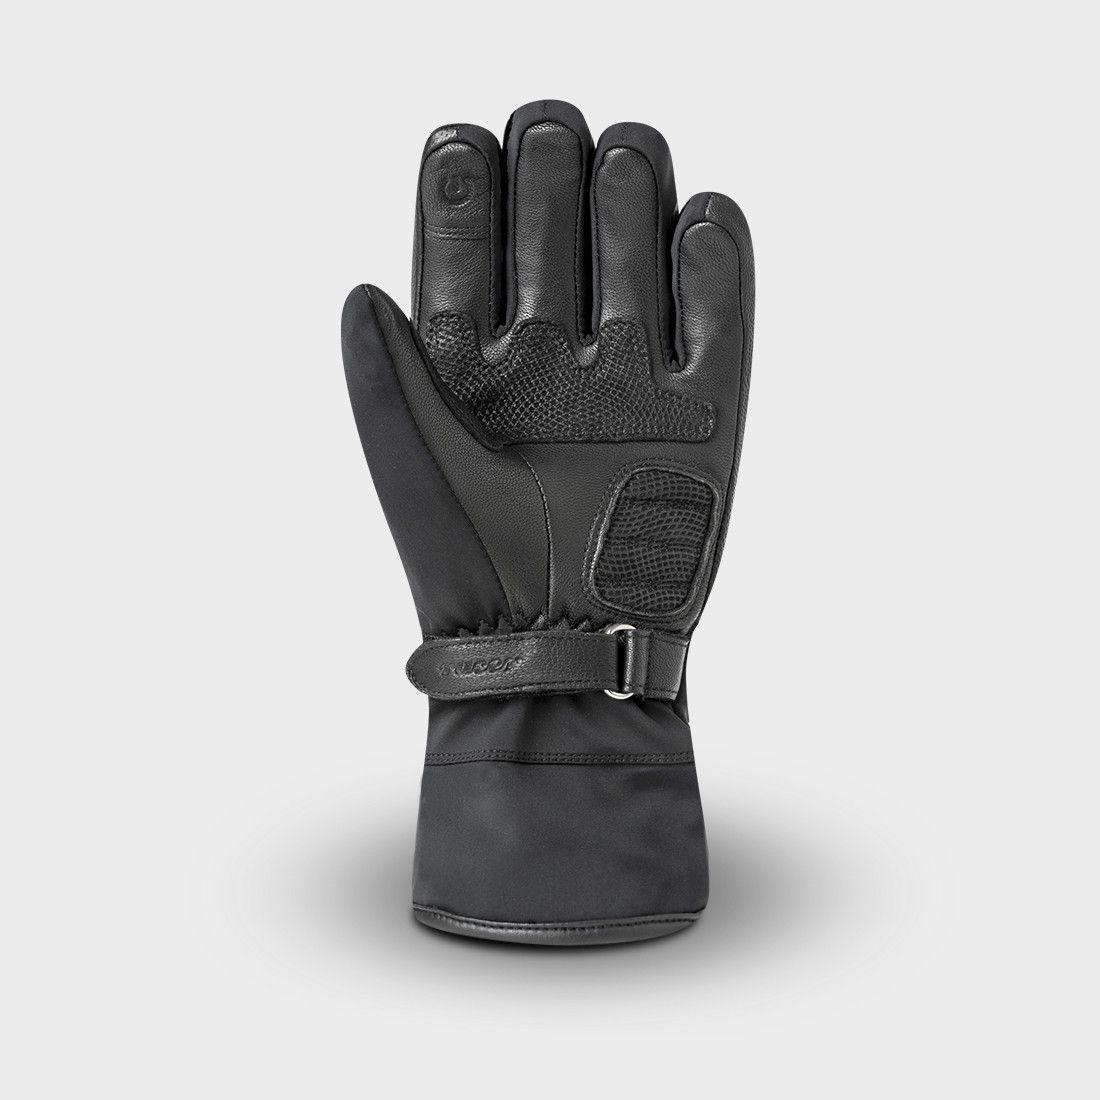 AUSTIN - Motorcycle gloves